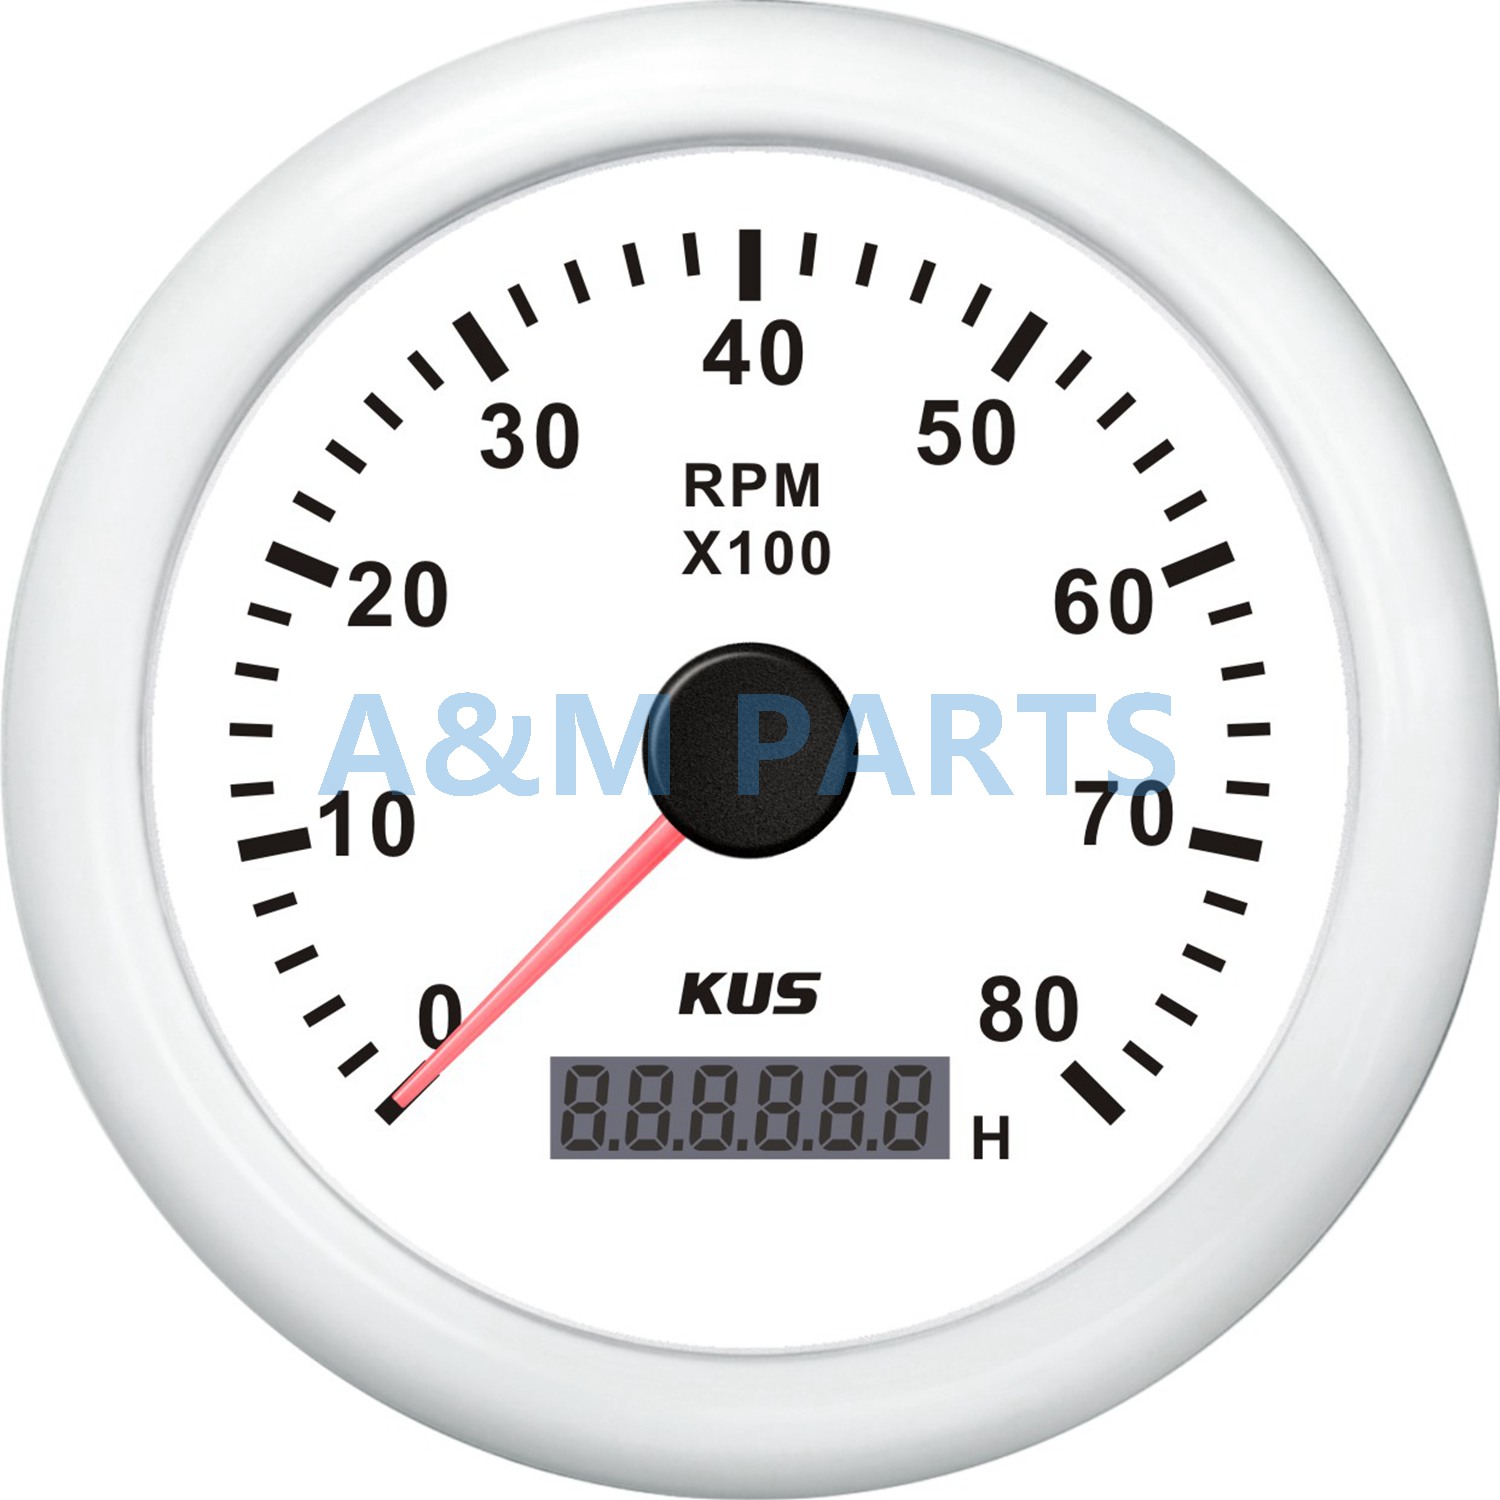 KUS Boat Engine RPM Meter LCD Hourmeter Tacho Gauge White 12V/24V ...